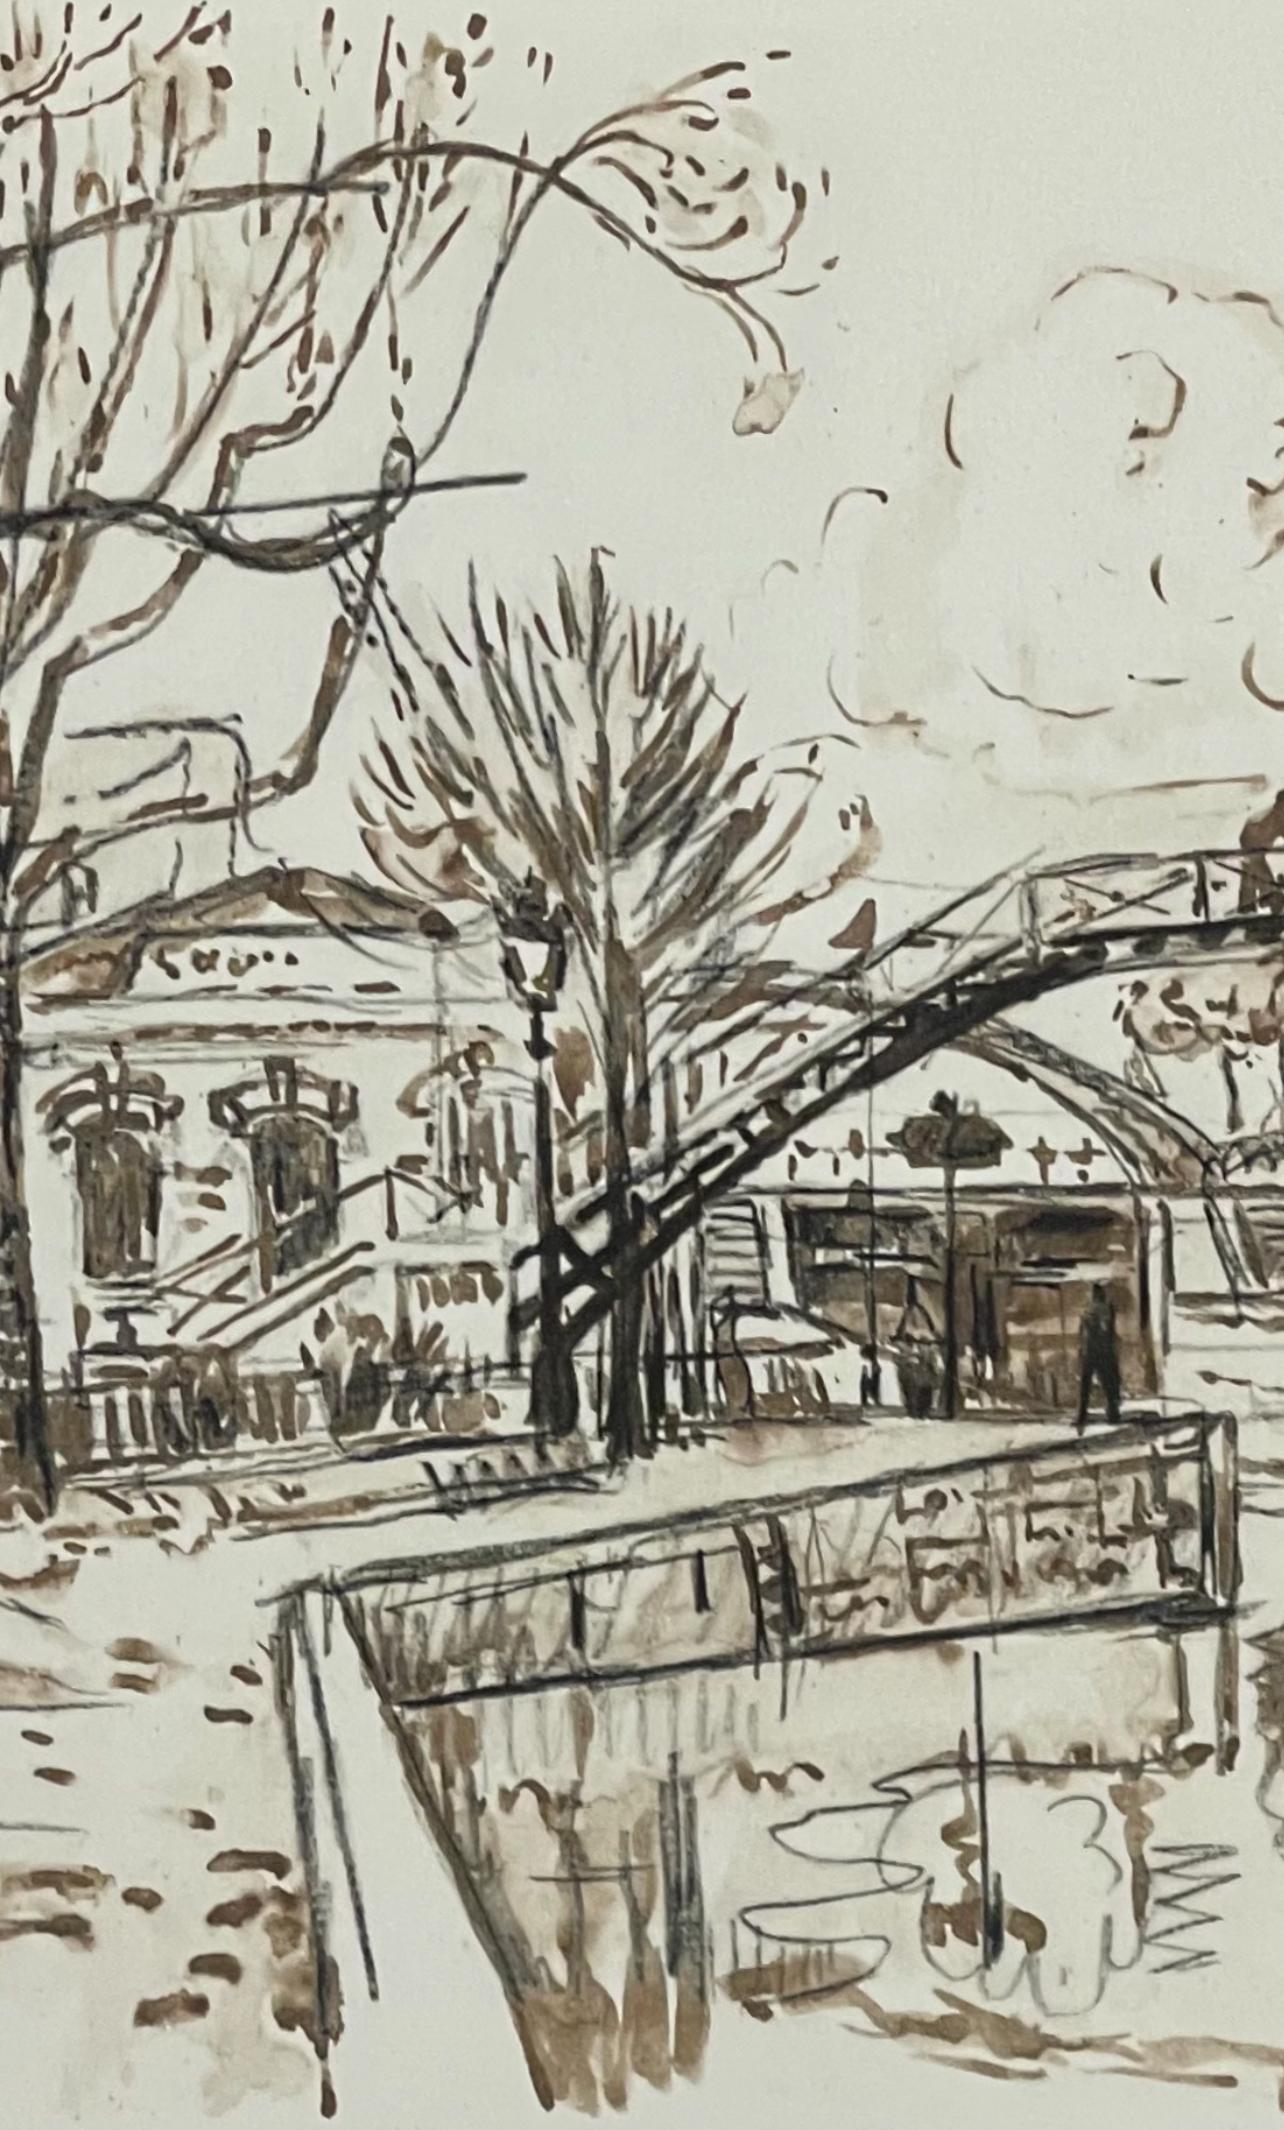 Signac, L'Hôtel du Nord, Signac Dessins (nach) (Impressionismus), Print, von Paul Signac